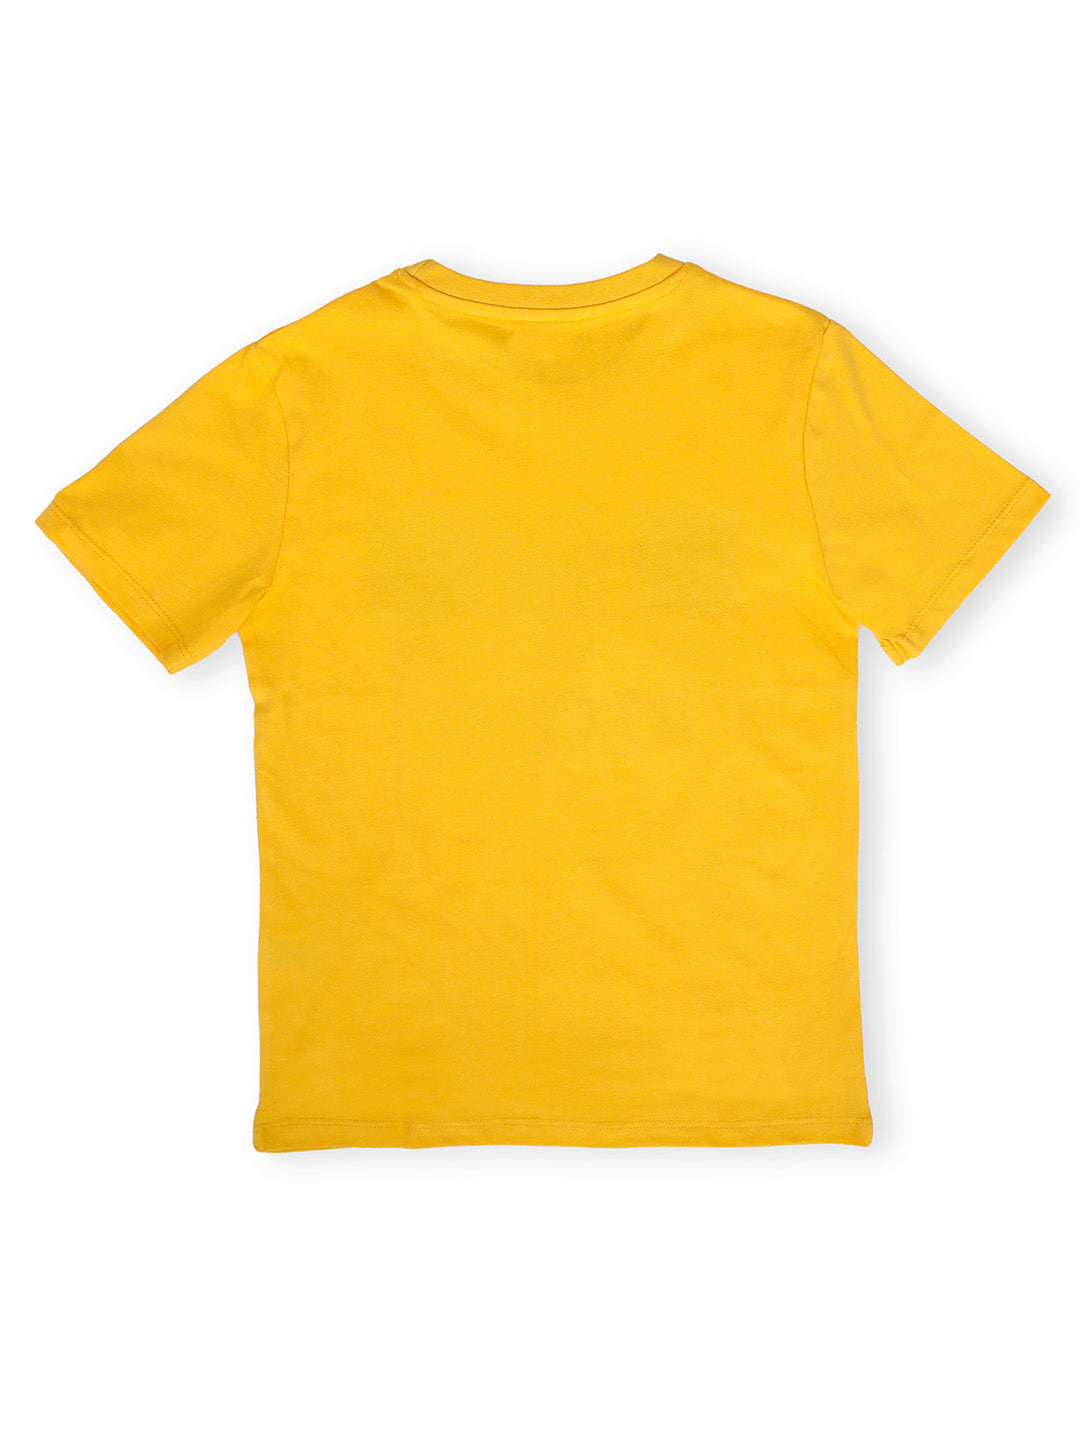 TWGE - Kids Tshirt for Boys - Printed Cotton Tees - Color Yellow